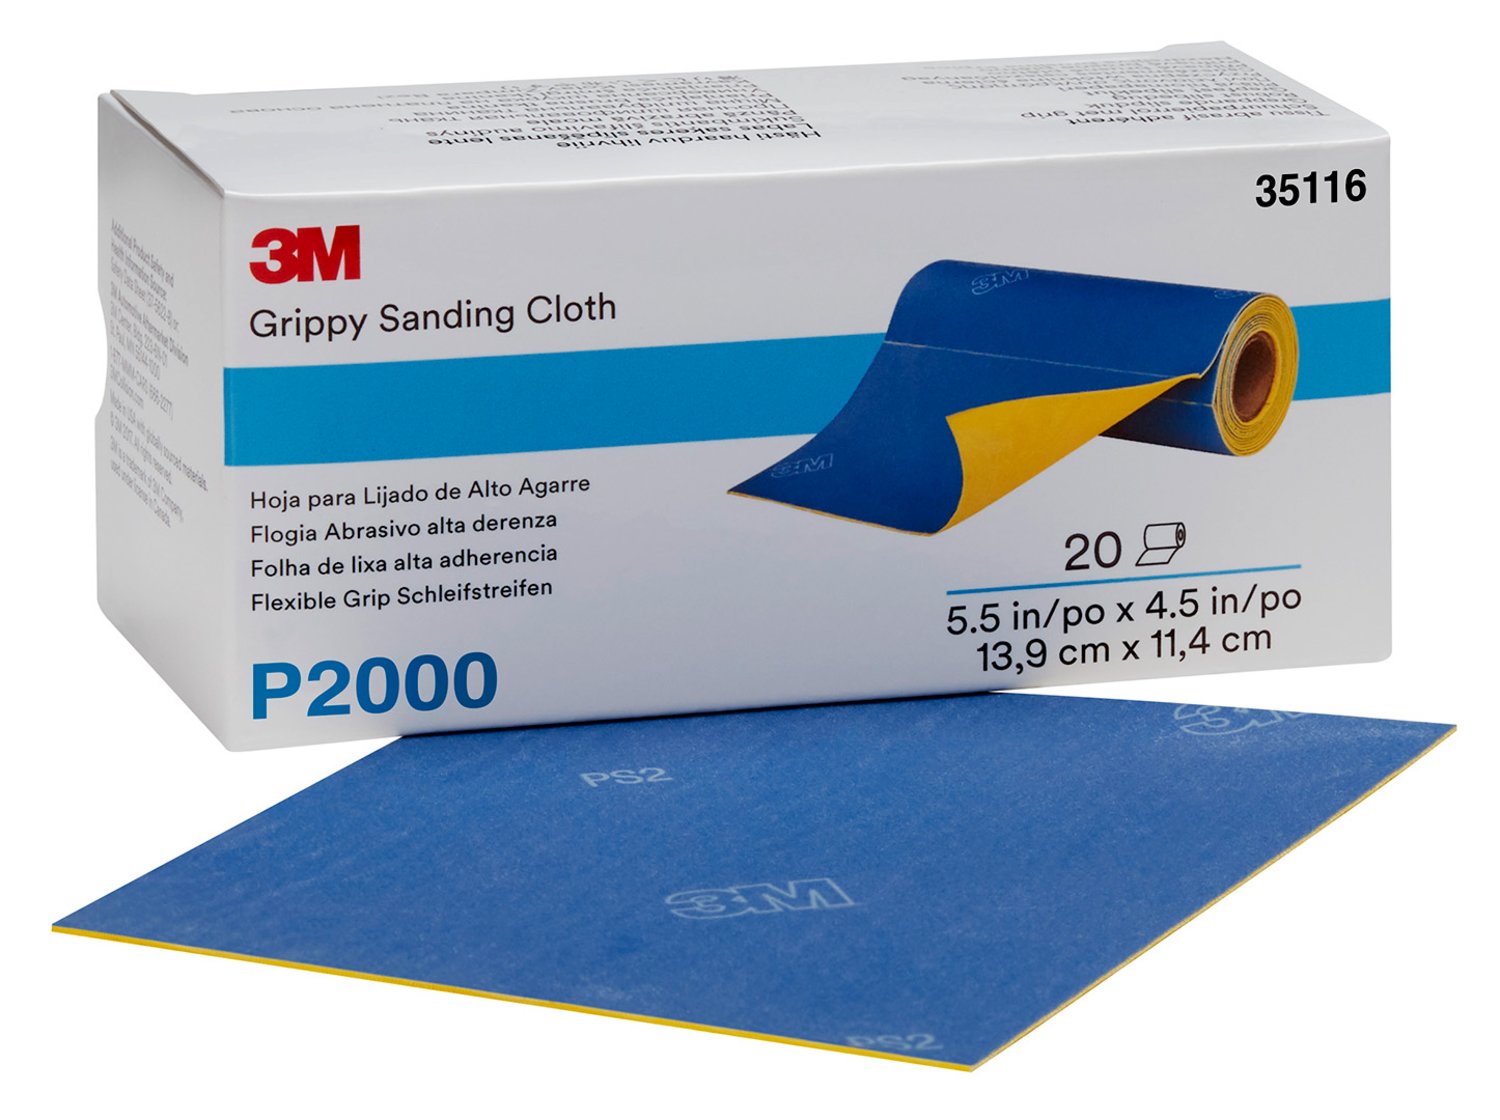 7100142883 - 3M Grippy Sanding Cloth 35116, P2000 Grade, 5.5 in x 4.5 in, 20
Sheets/Roll, 4 Rolls/Case